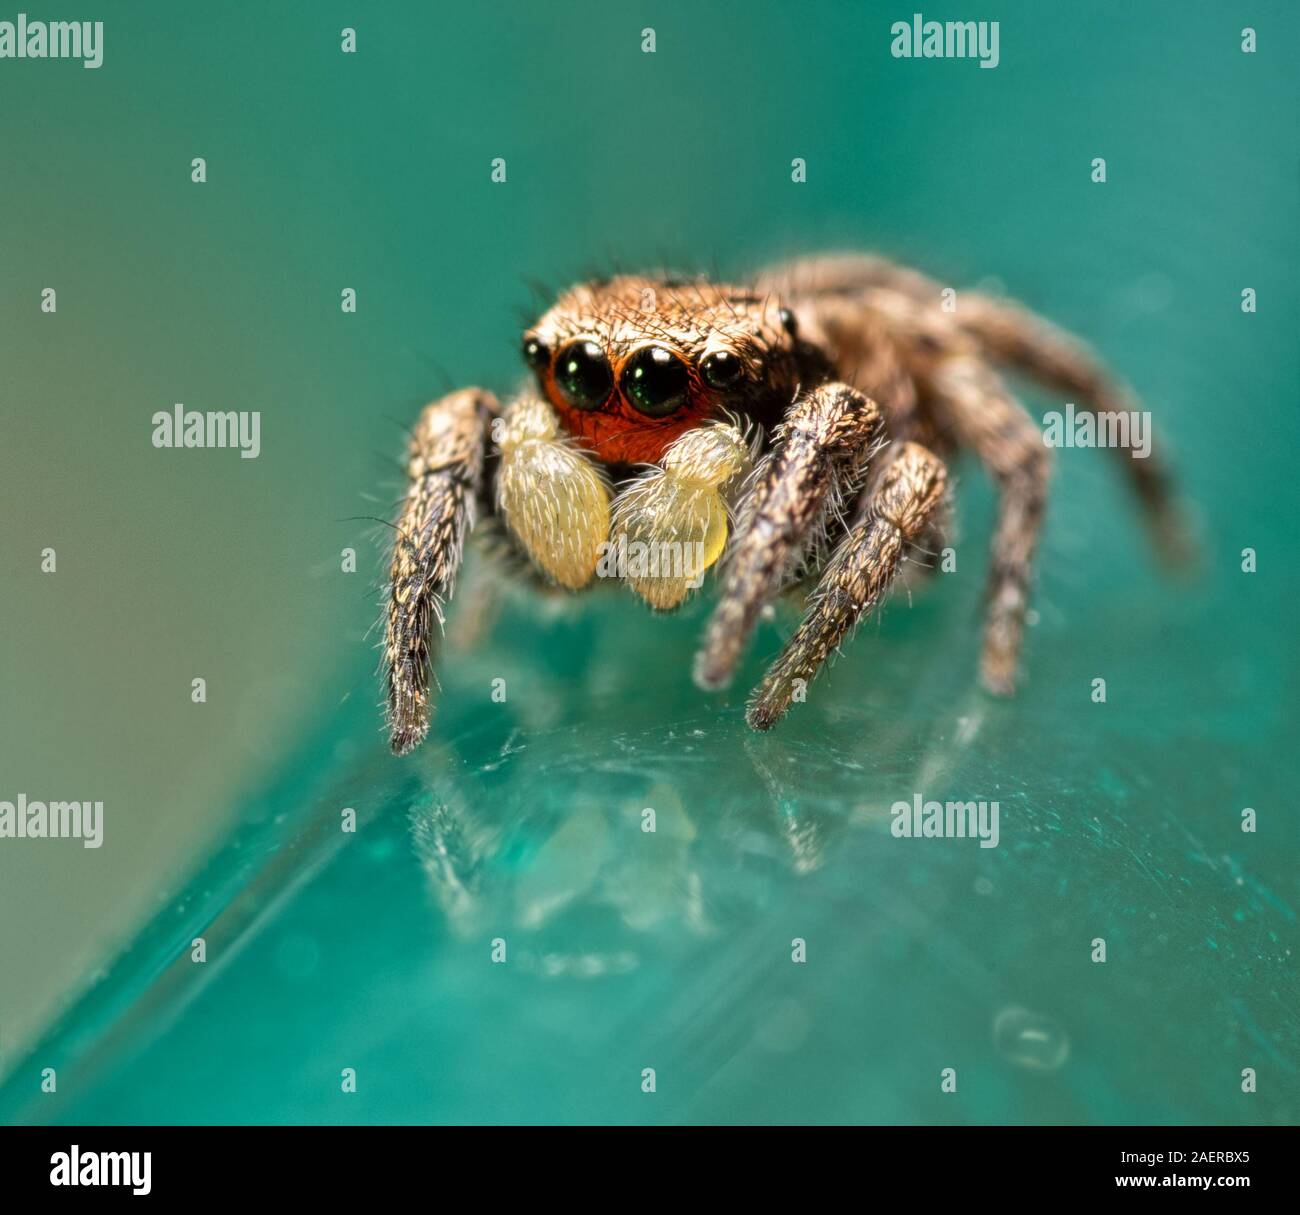 Tiny male Habronattus coecatus jumping spider on green background Stock Photo